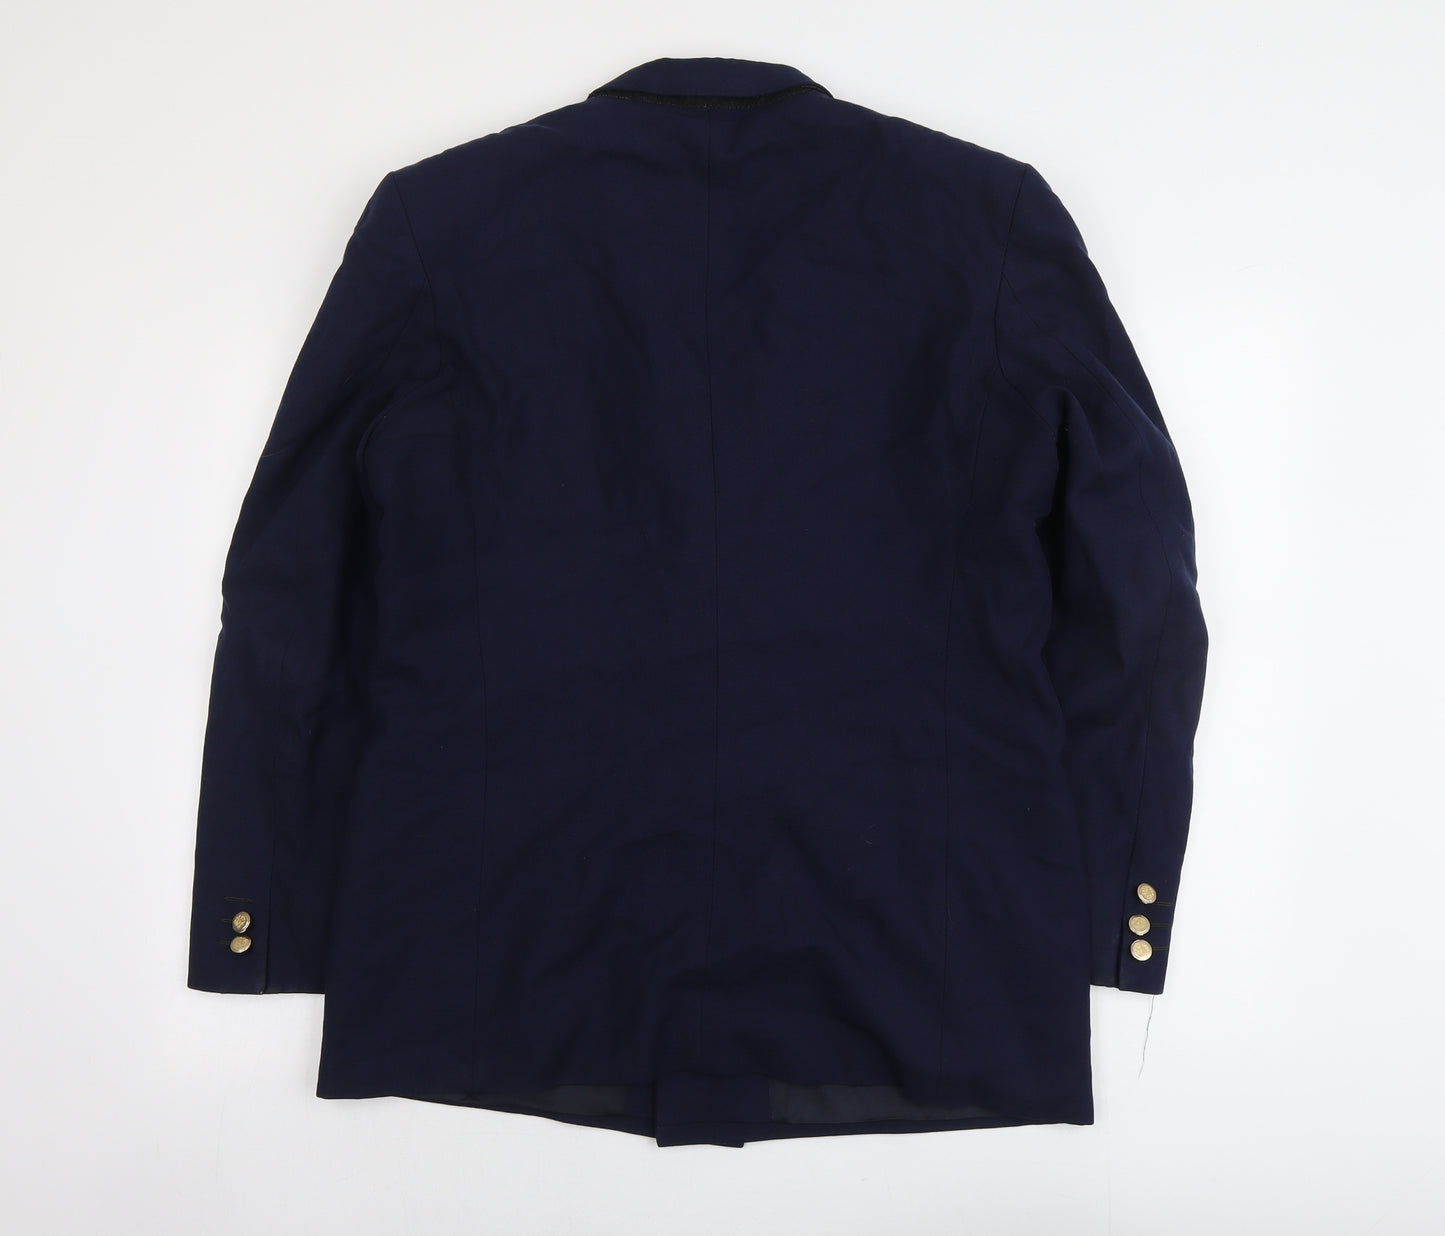 Brentoni Mens Blue Wool Jacket Suit Jacket Size 40 Regular